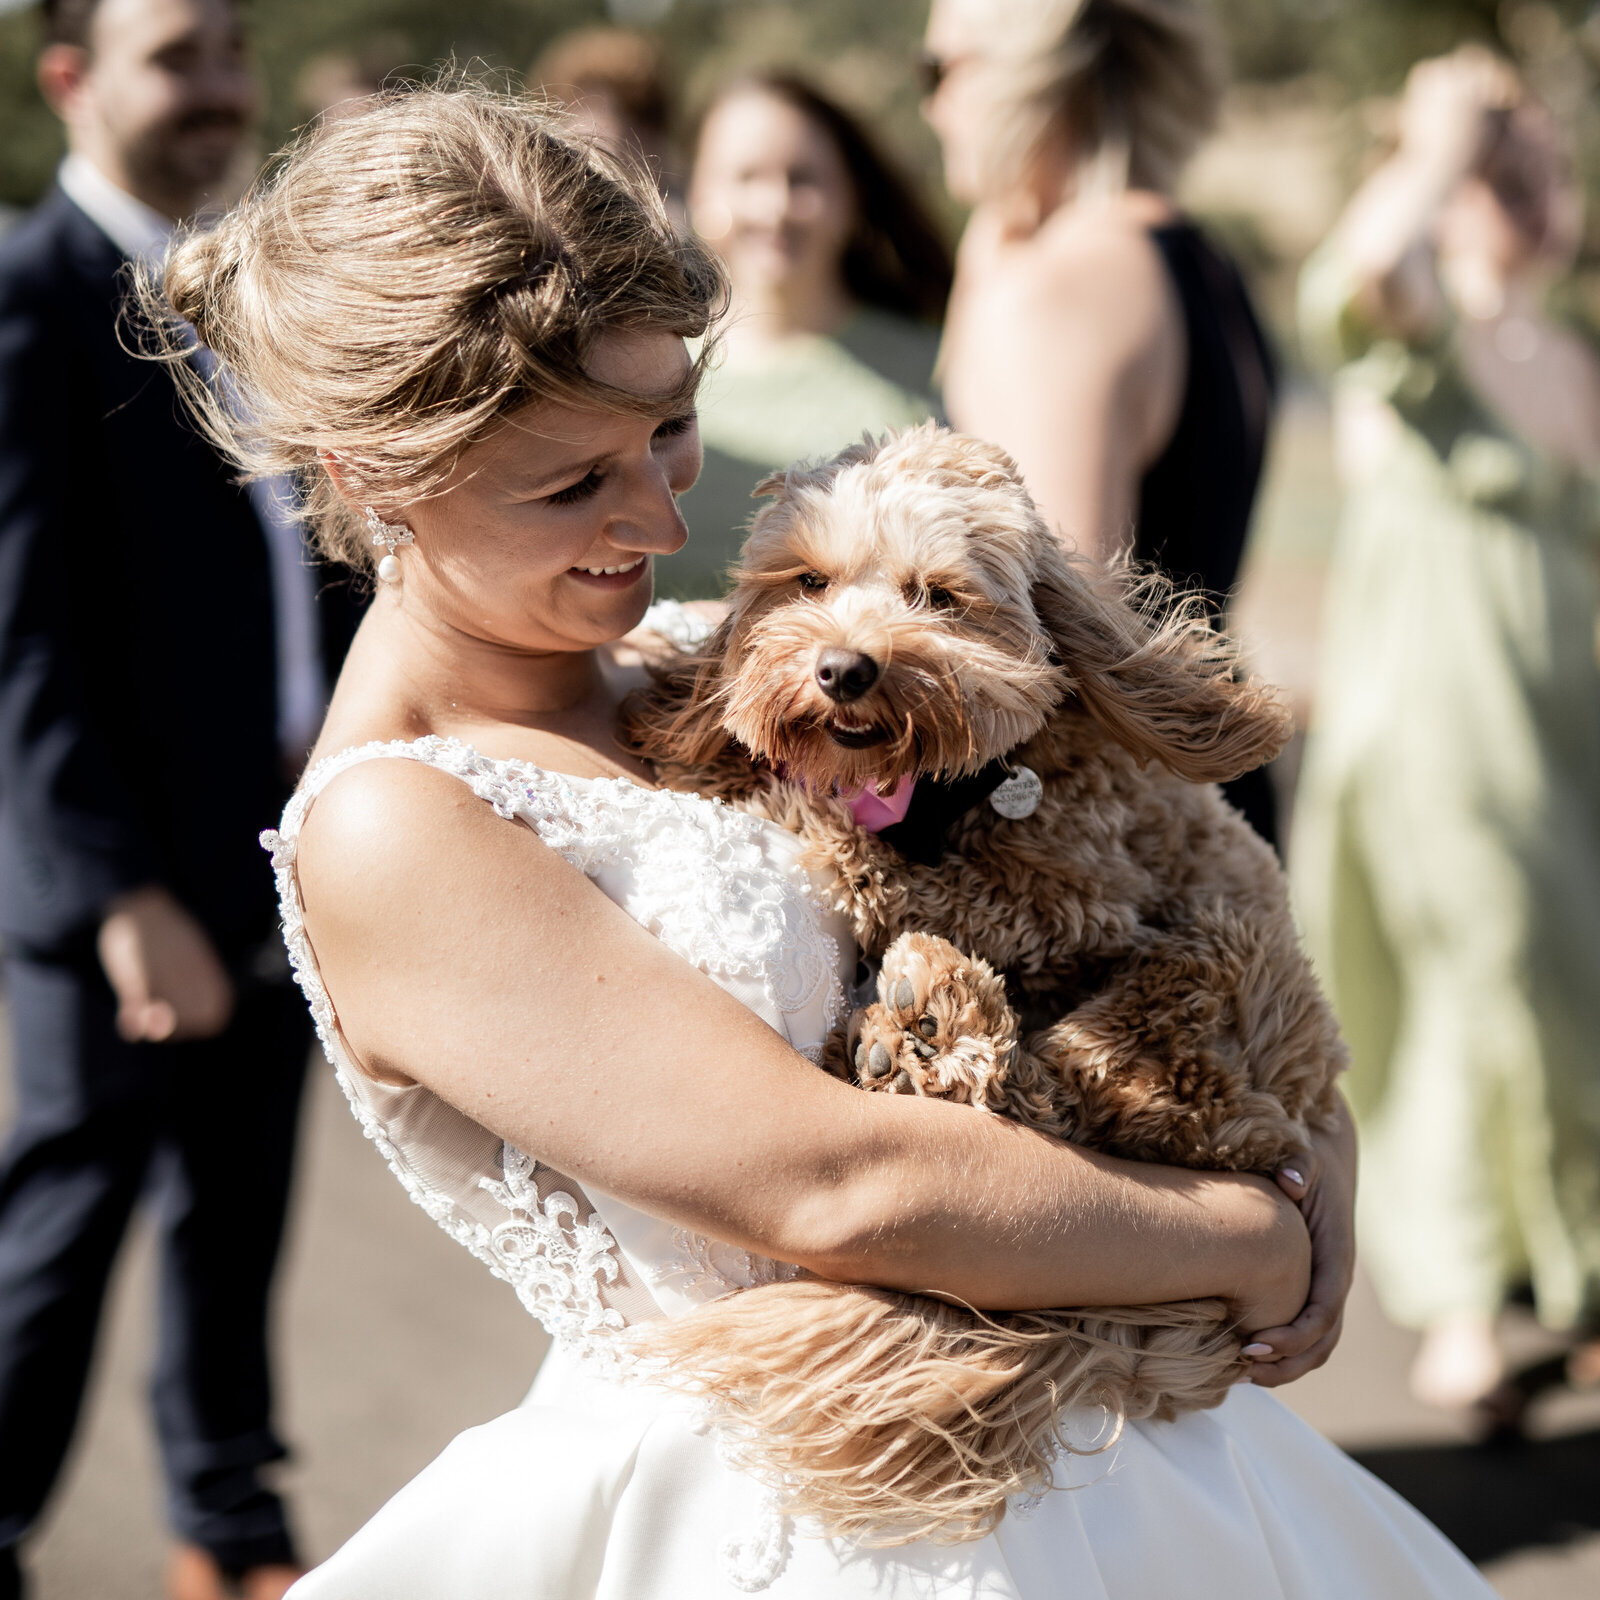 Rosie-Tom-Rexvil-Photography-Adelaide-Wedding-Photographer-672